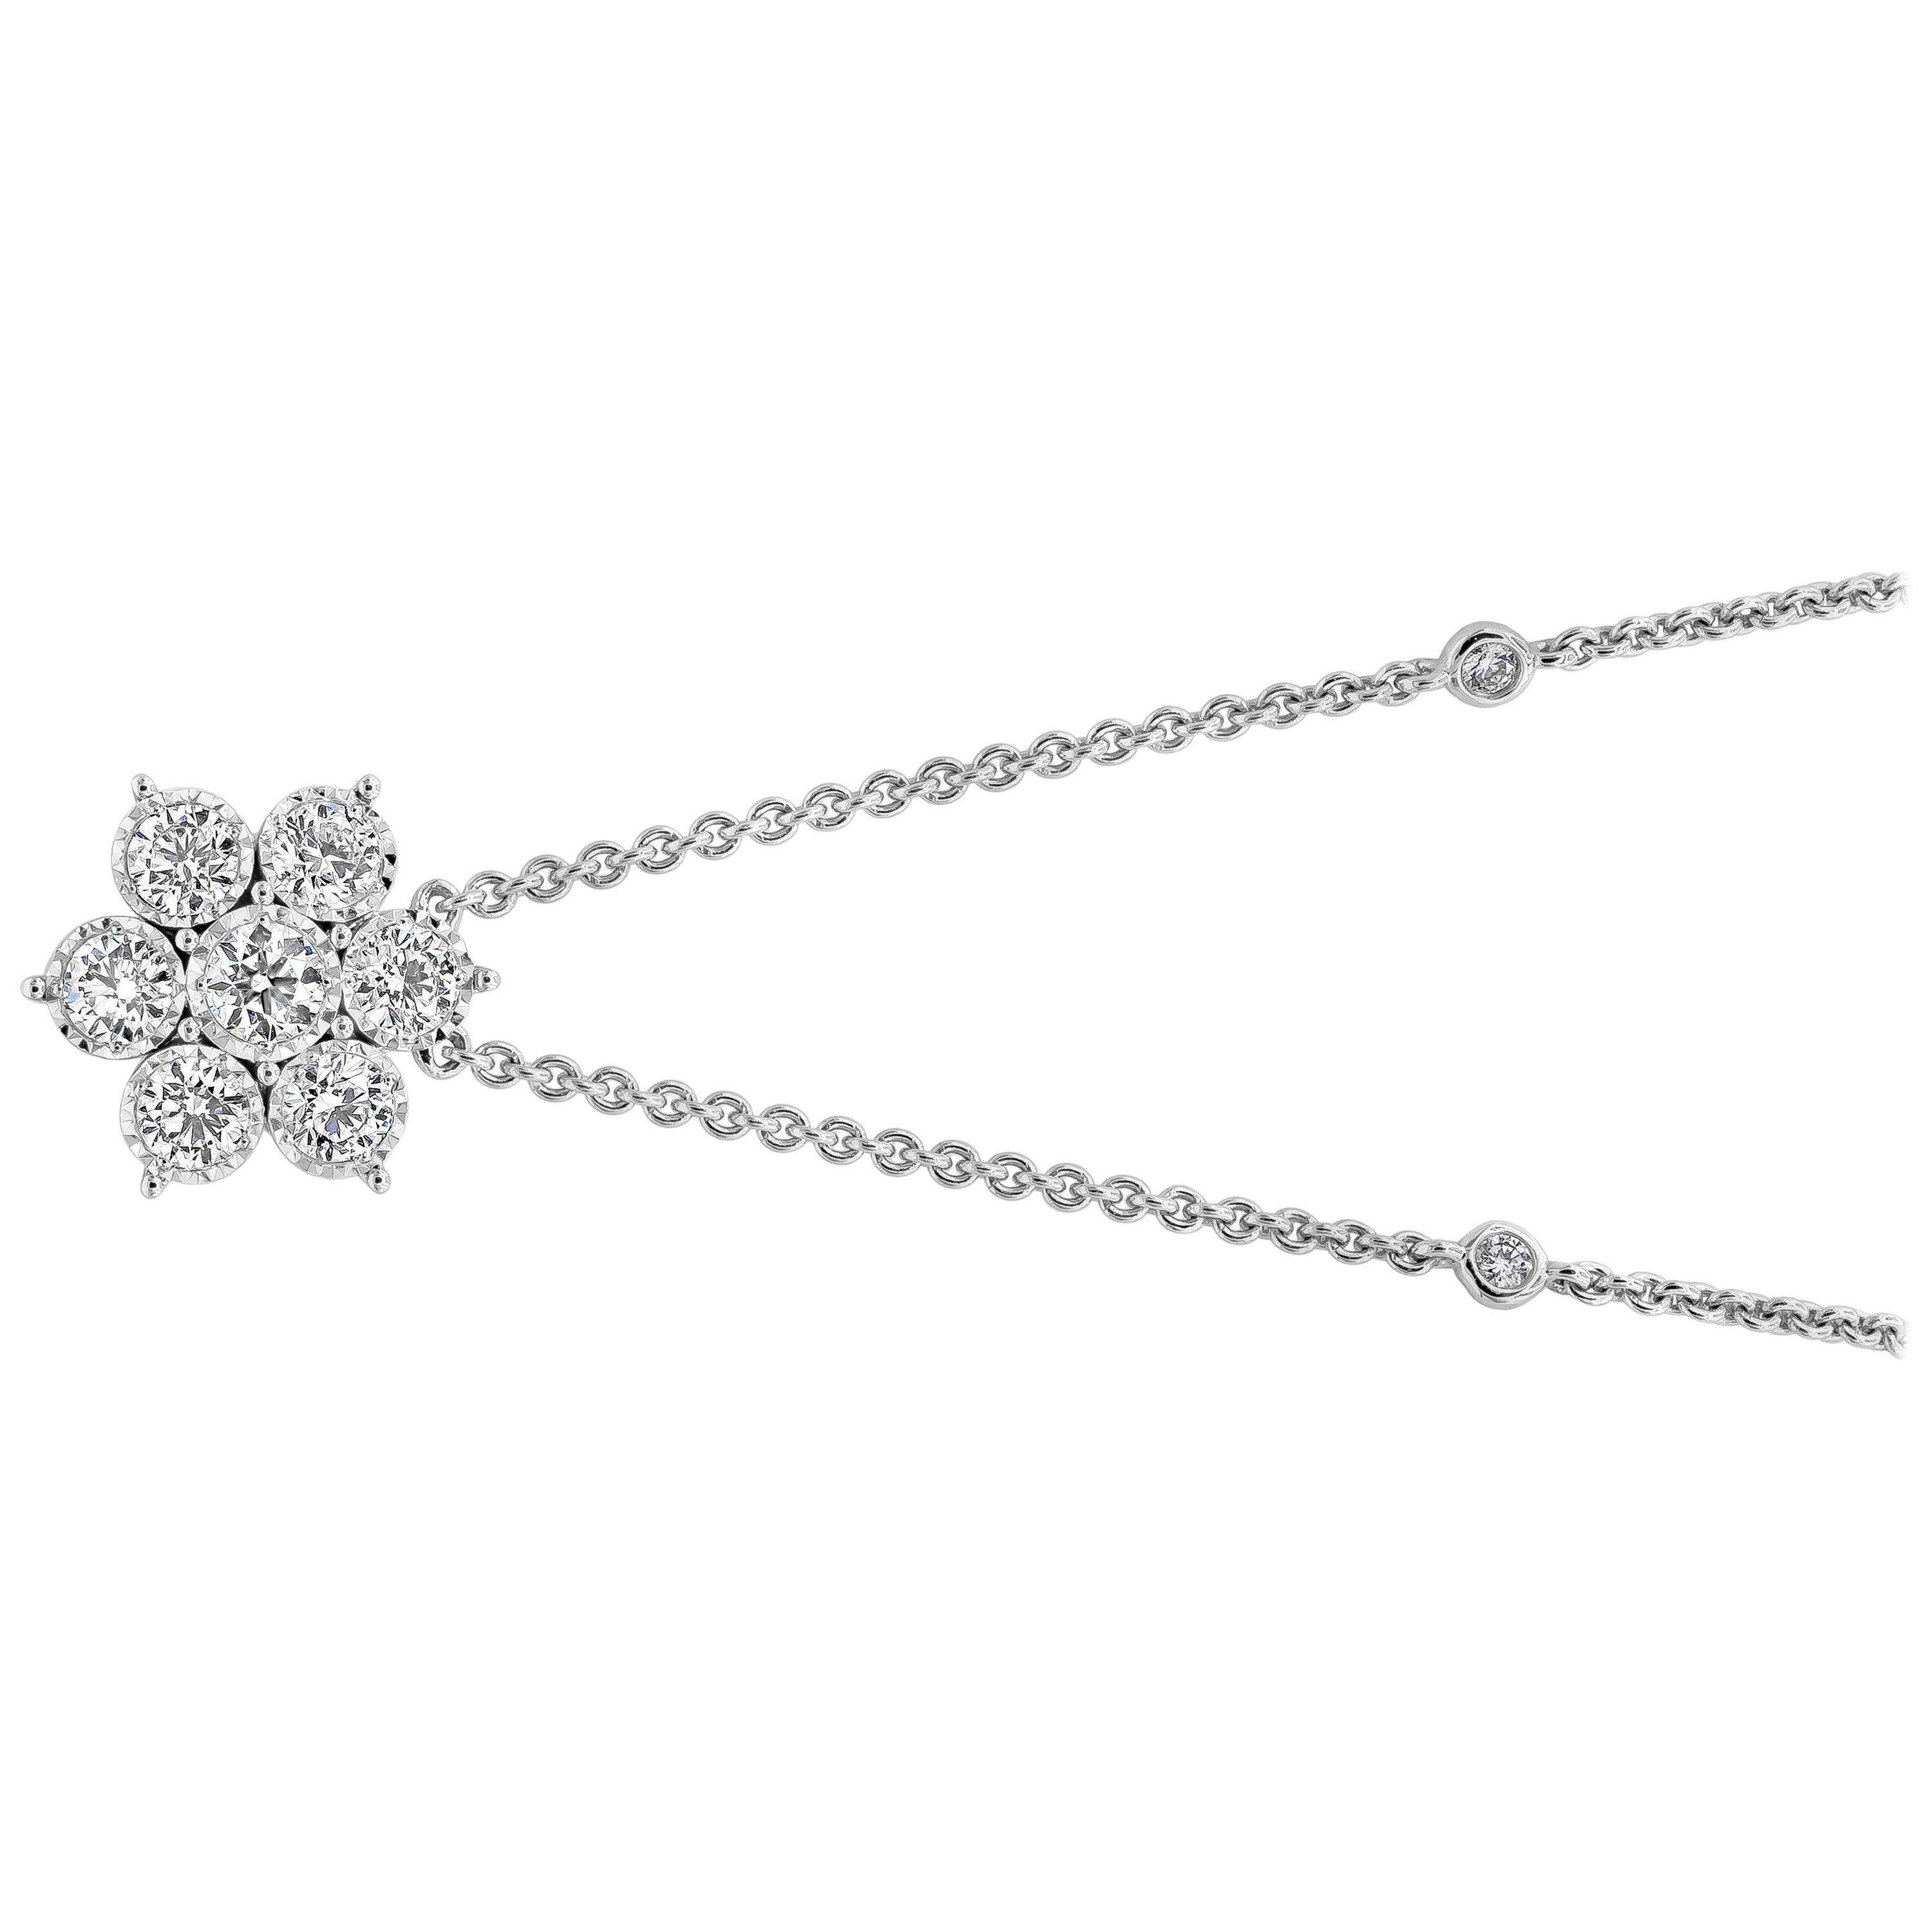 Roman Malakov 1.12 carats Total Round Diamond Cluster Flower Pendant Necklace For Sale